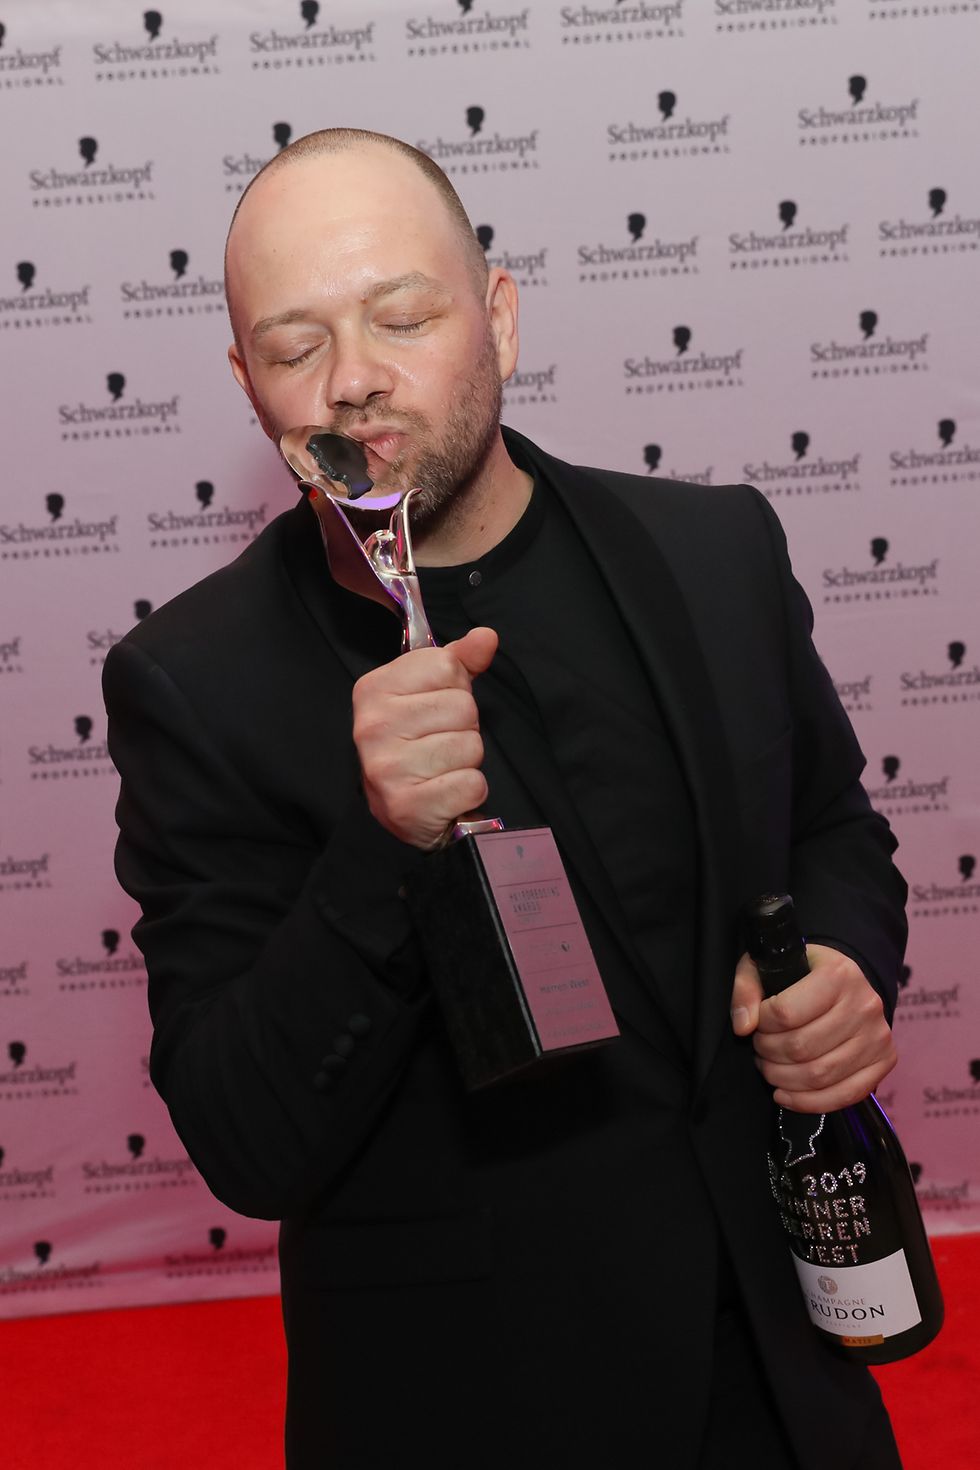 Alexander Lepschi (Hairdresser of the Year 2019)